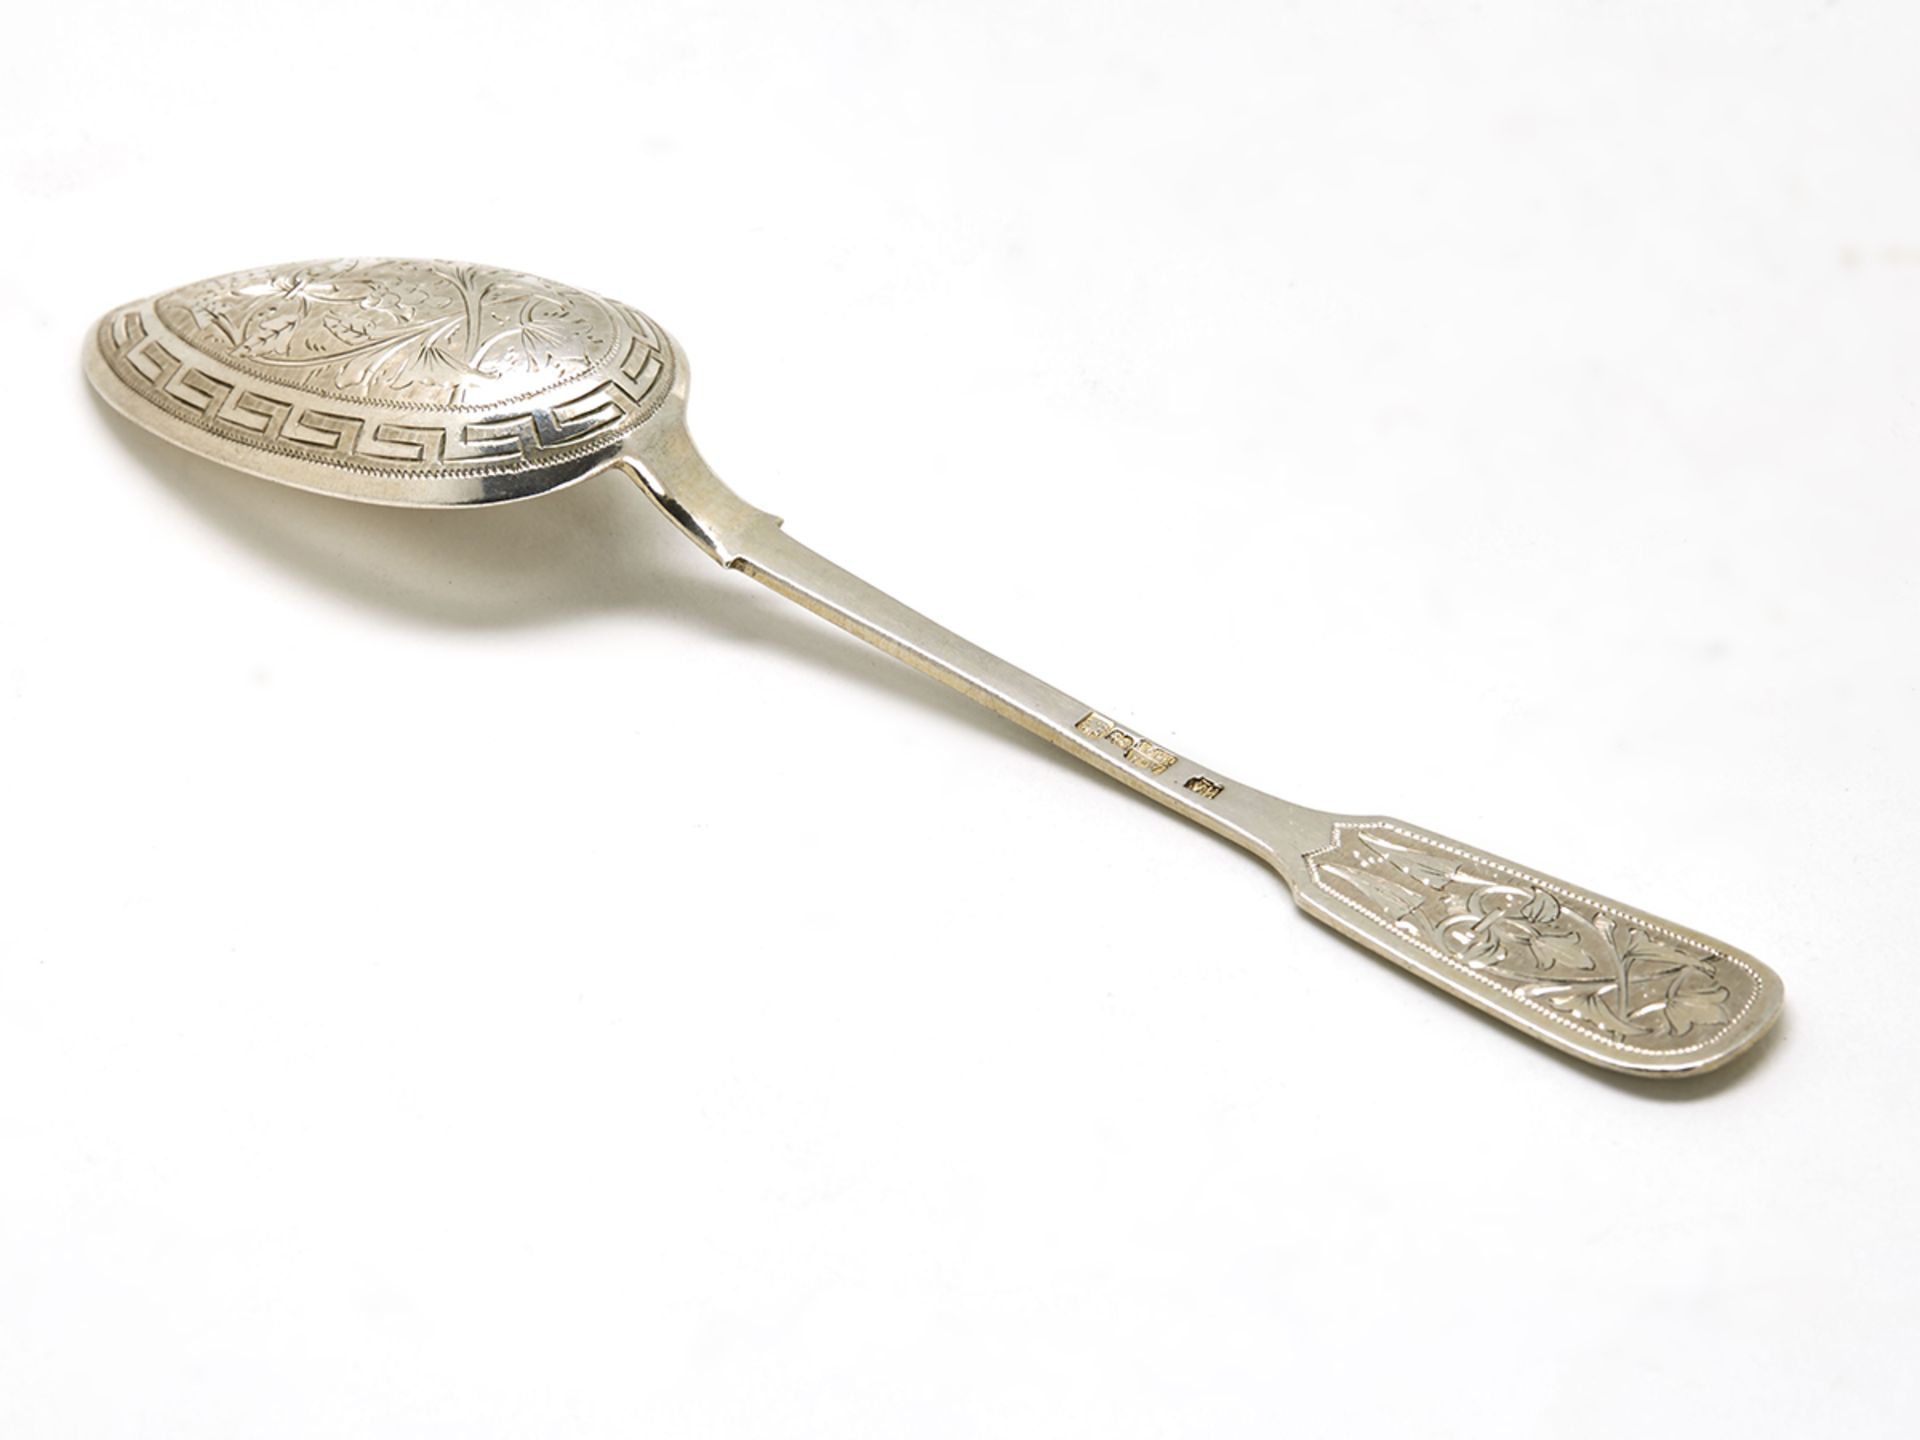 Antique Russian Engraved Silver Spoon Ivan Alexeyev 1890 - Image 2 of 6